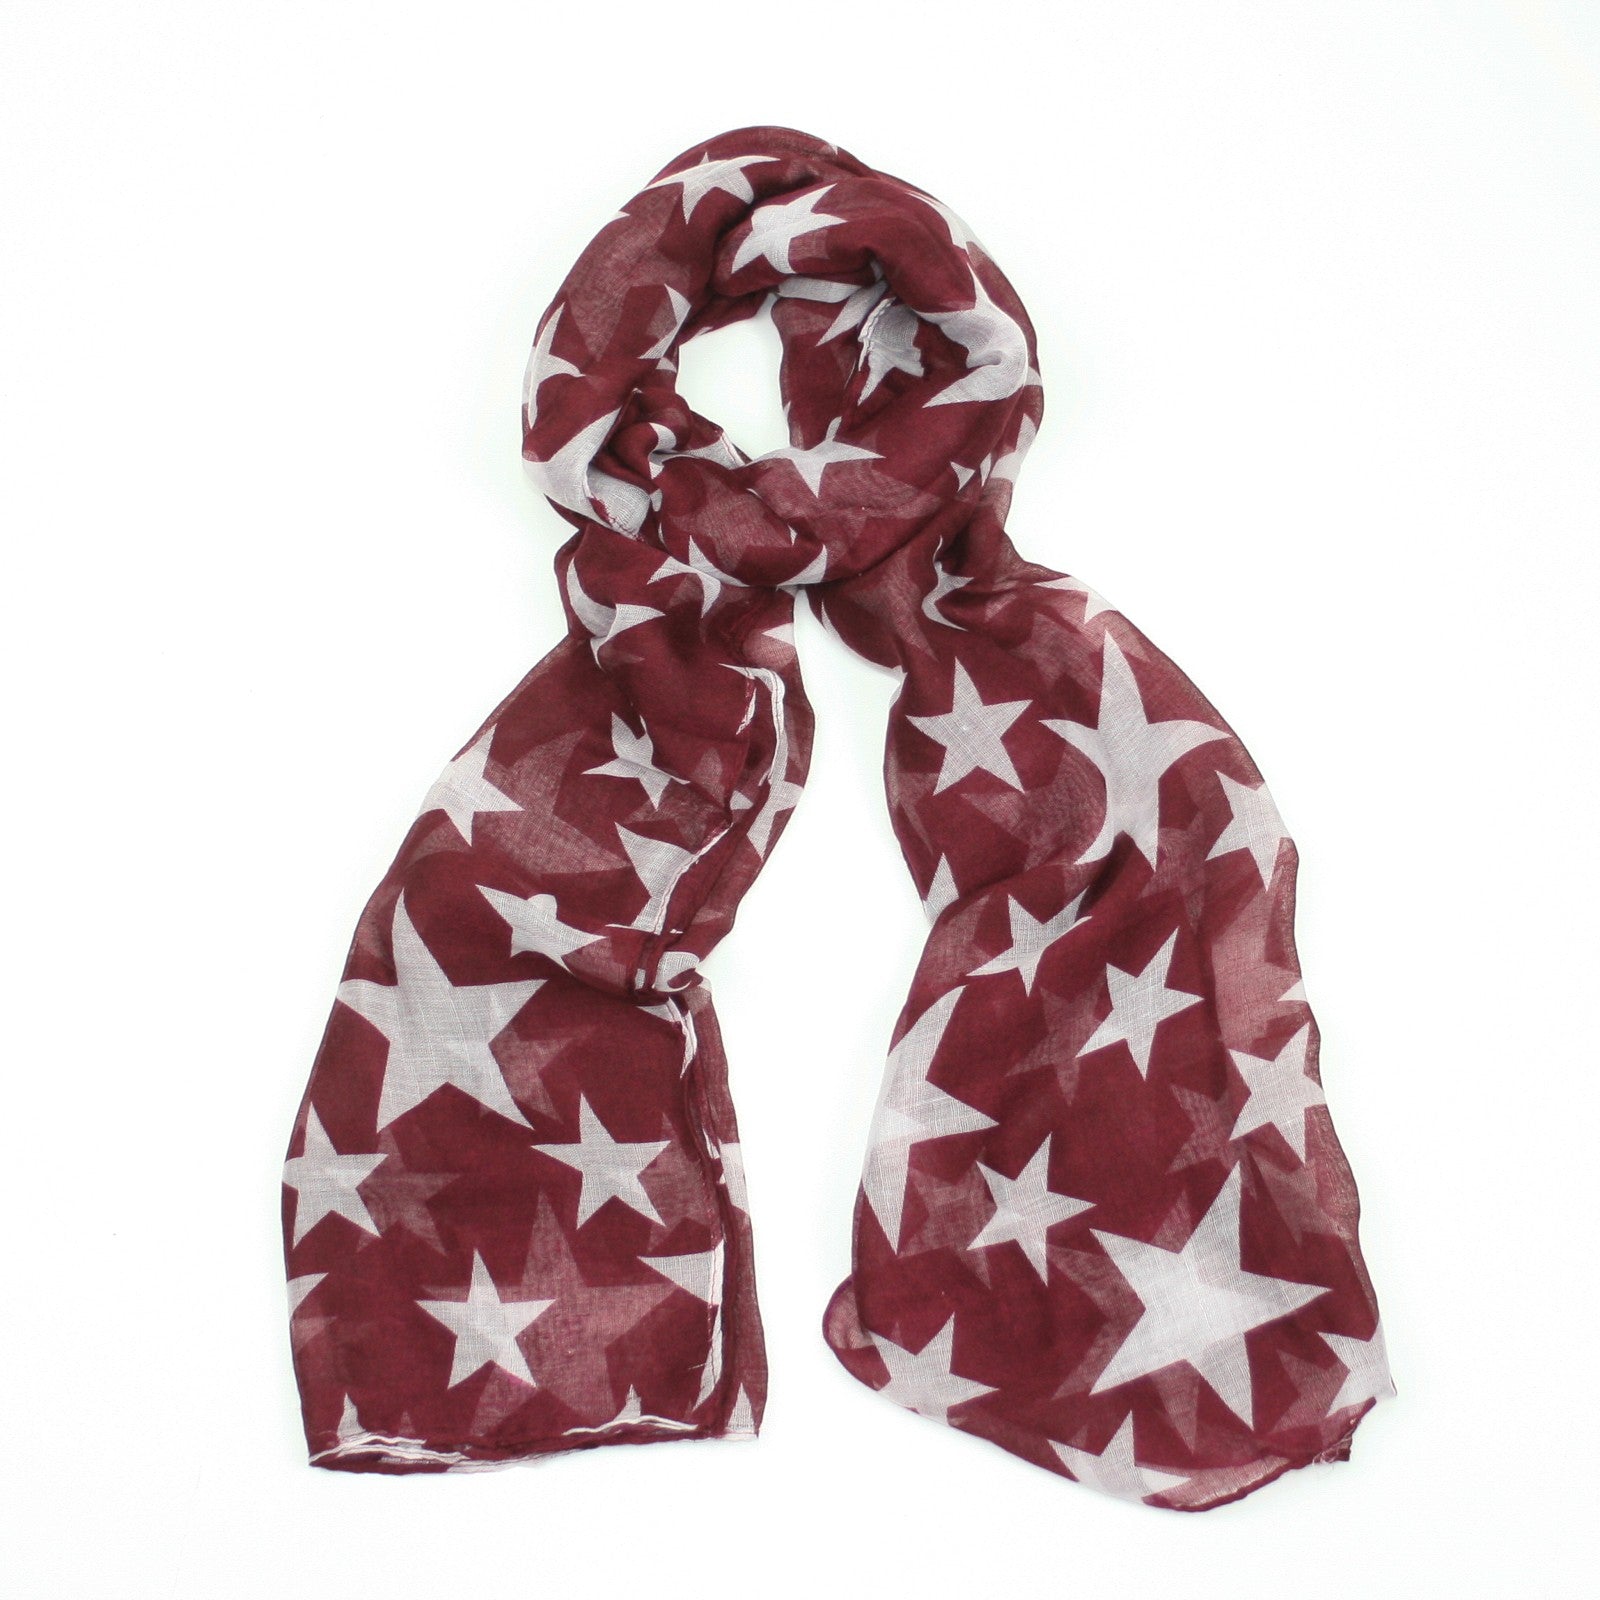 Pretty fashionable scarf with white star print narrow scarf